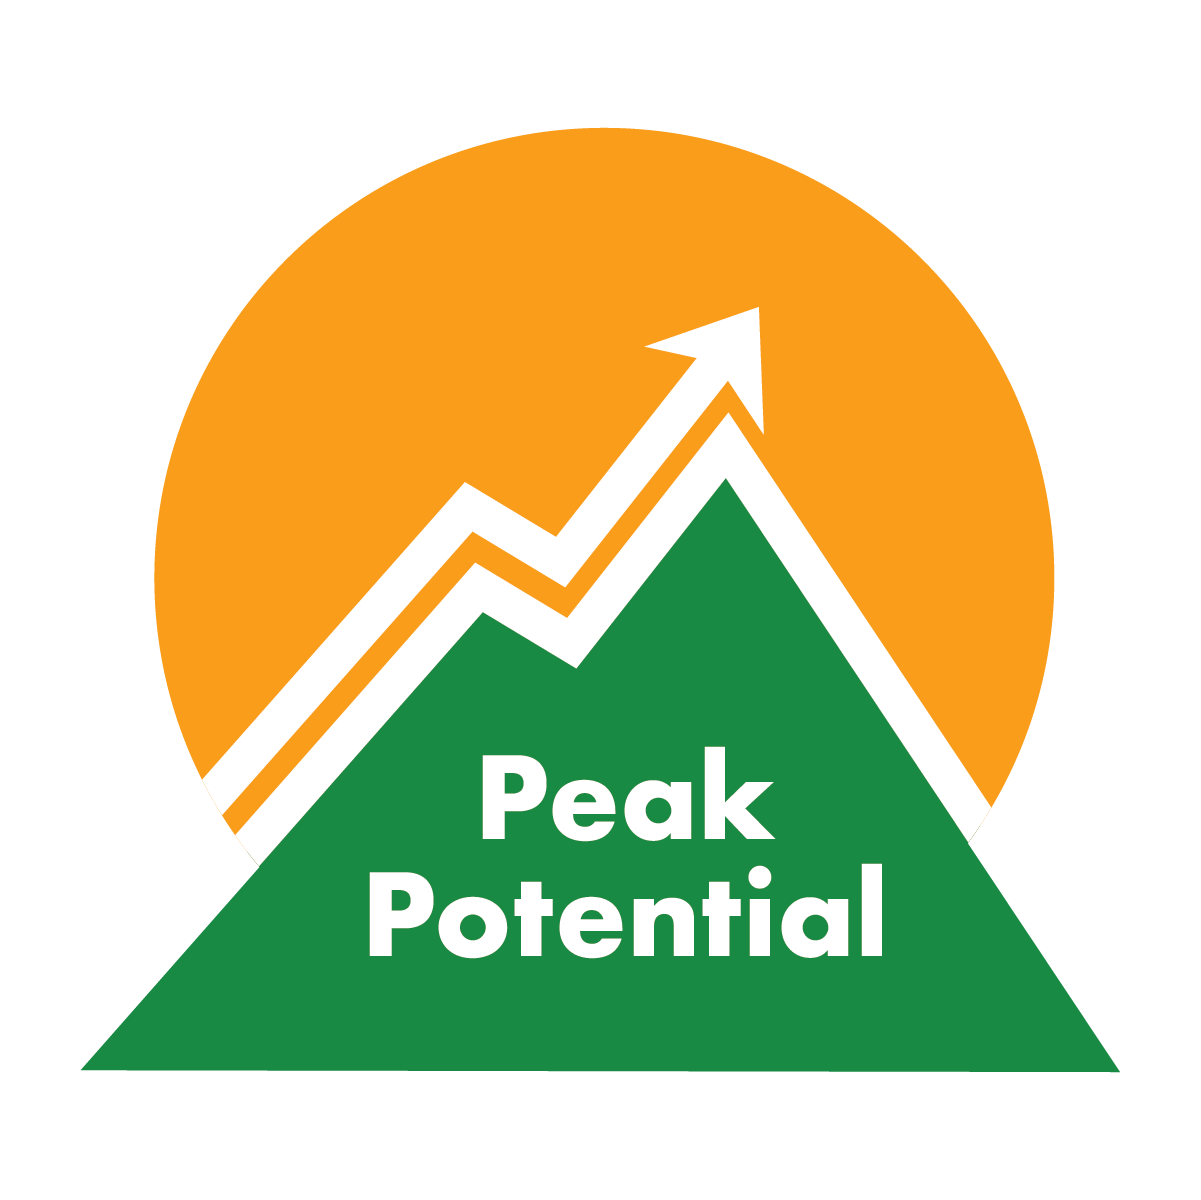 Peak Potential